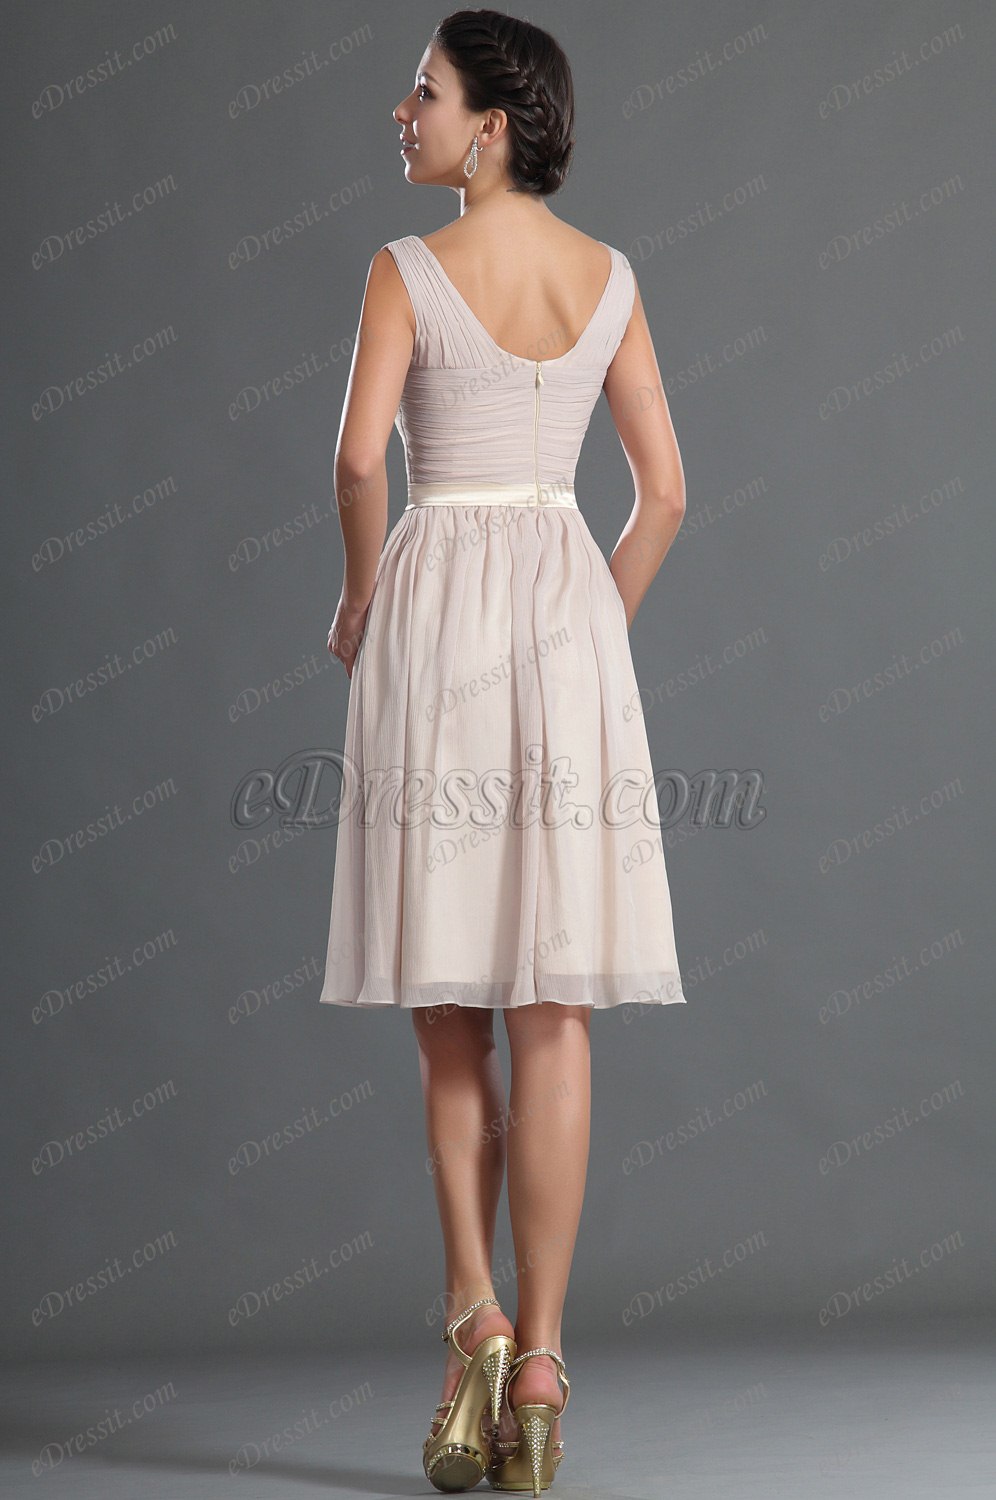 eDressit Simple Cocktail Dress Party Dress (04124914)